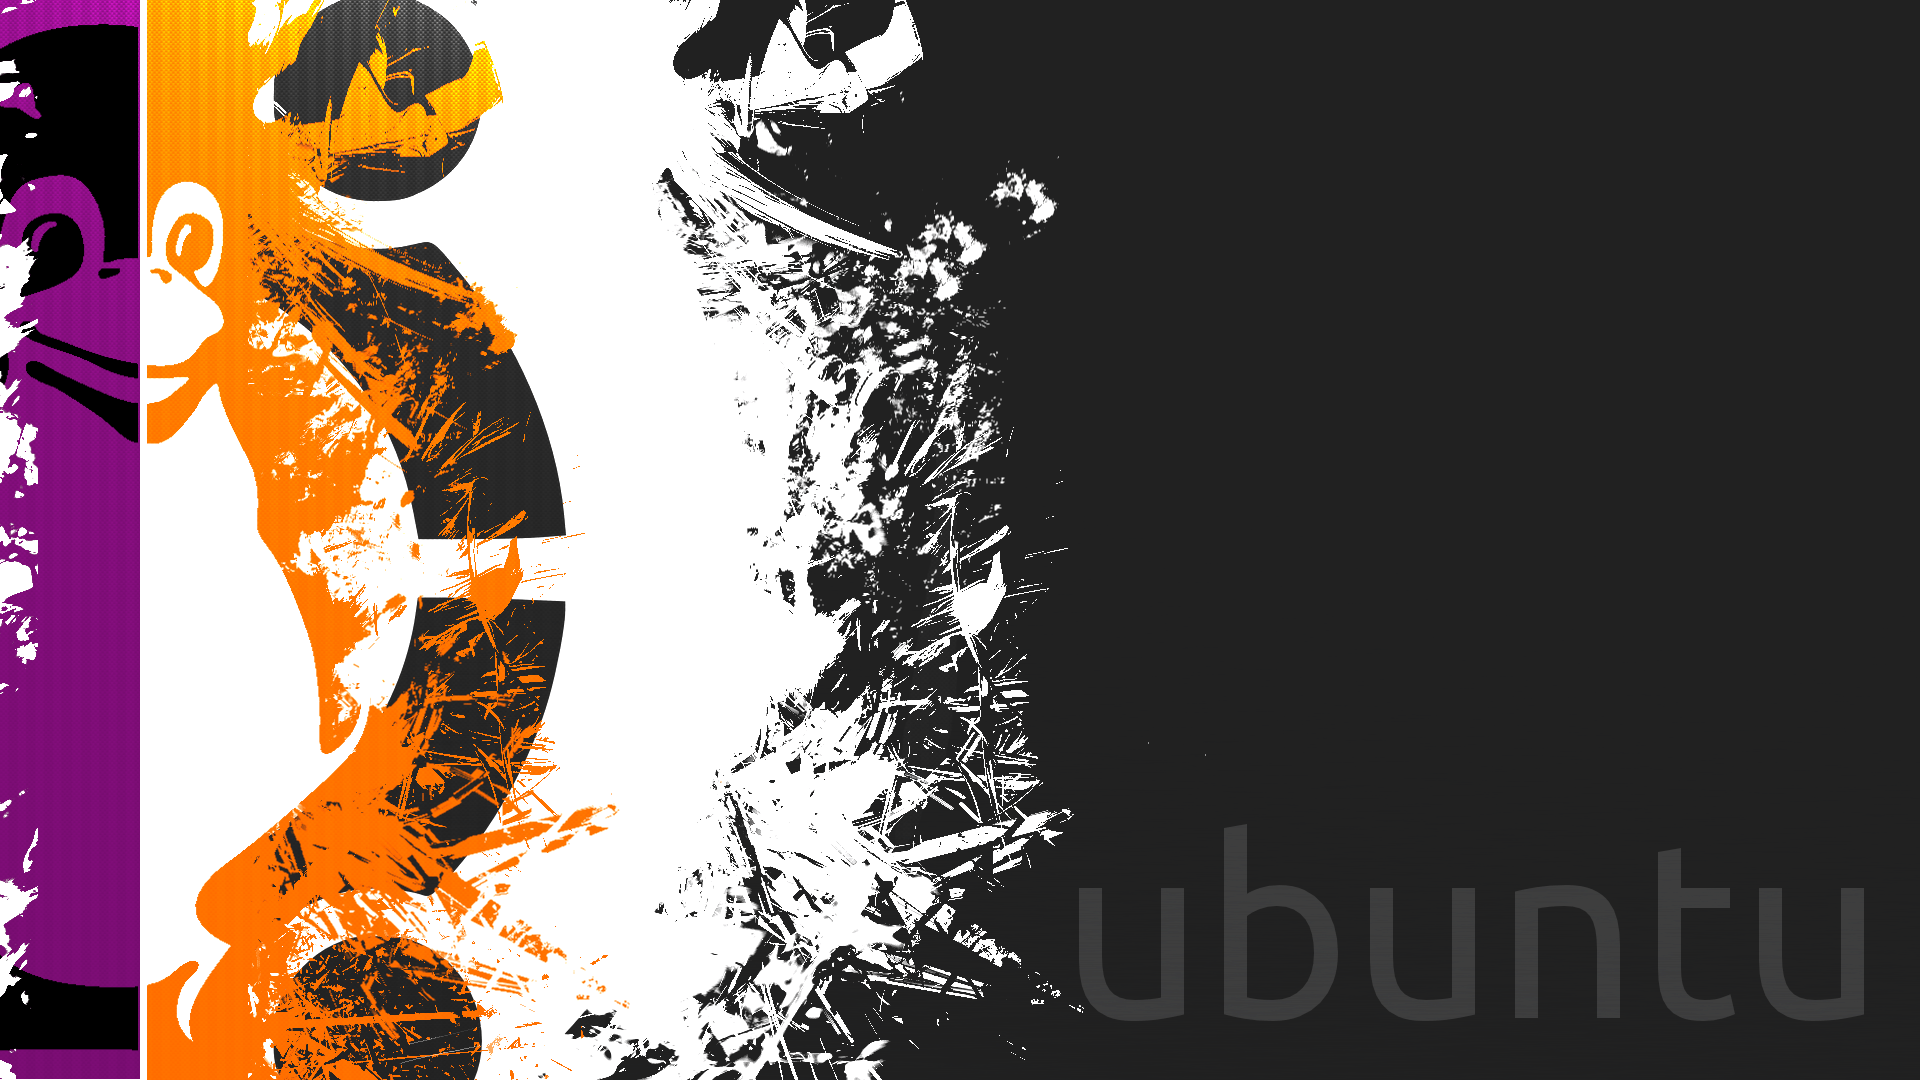 Ubuntu Tux Wallpaper